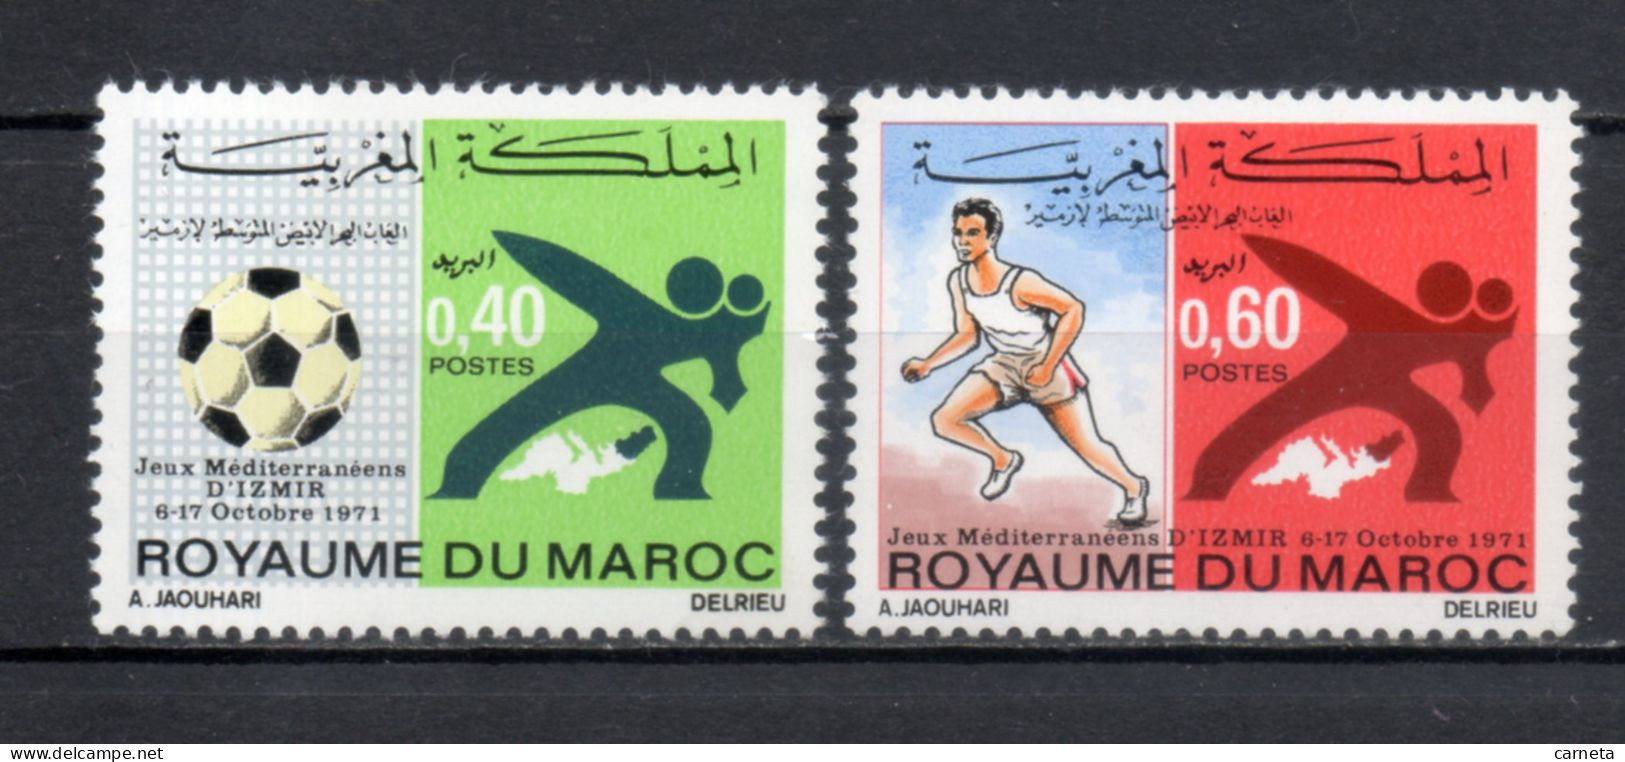 MAROC N°  625 + 626    NEUFS SANS CHARNIERE  COTE 2.00€  FOOTBALL JEUX SPORT - Morocco (1956-...)